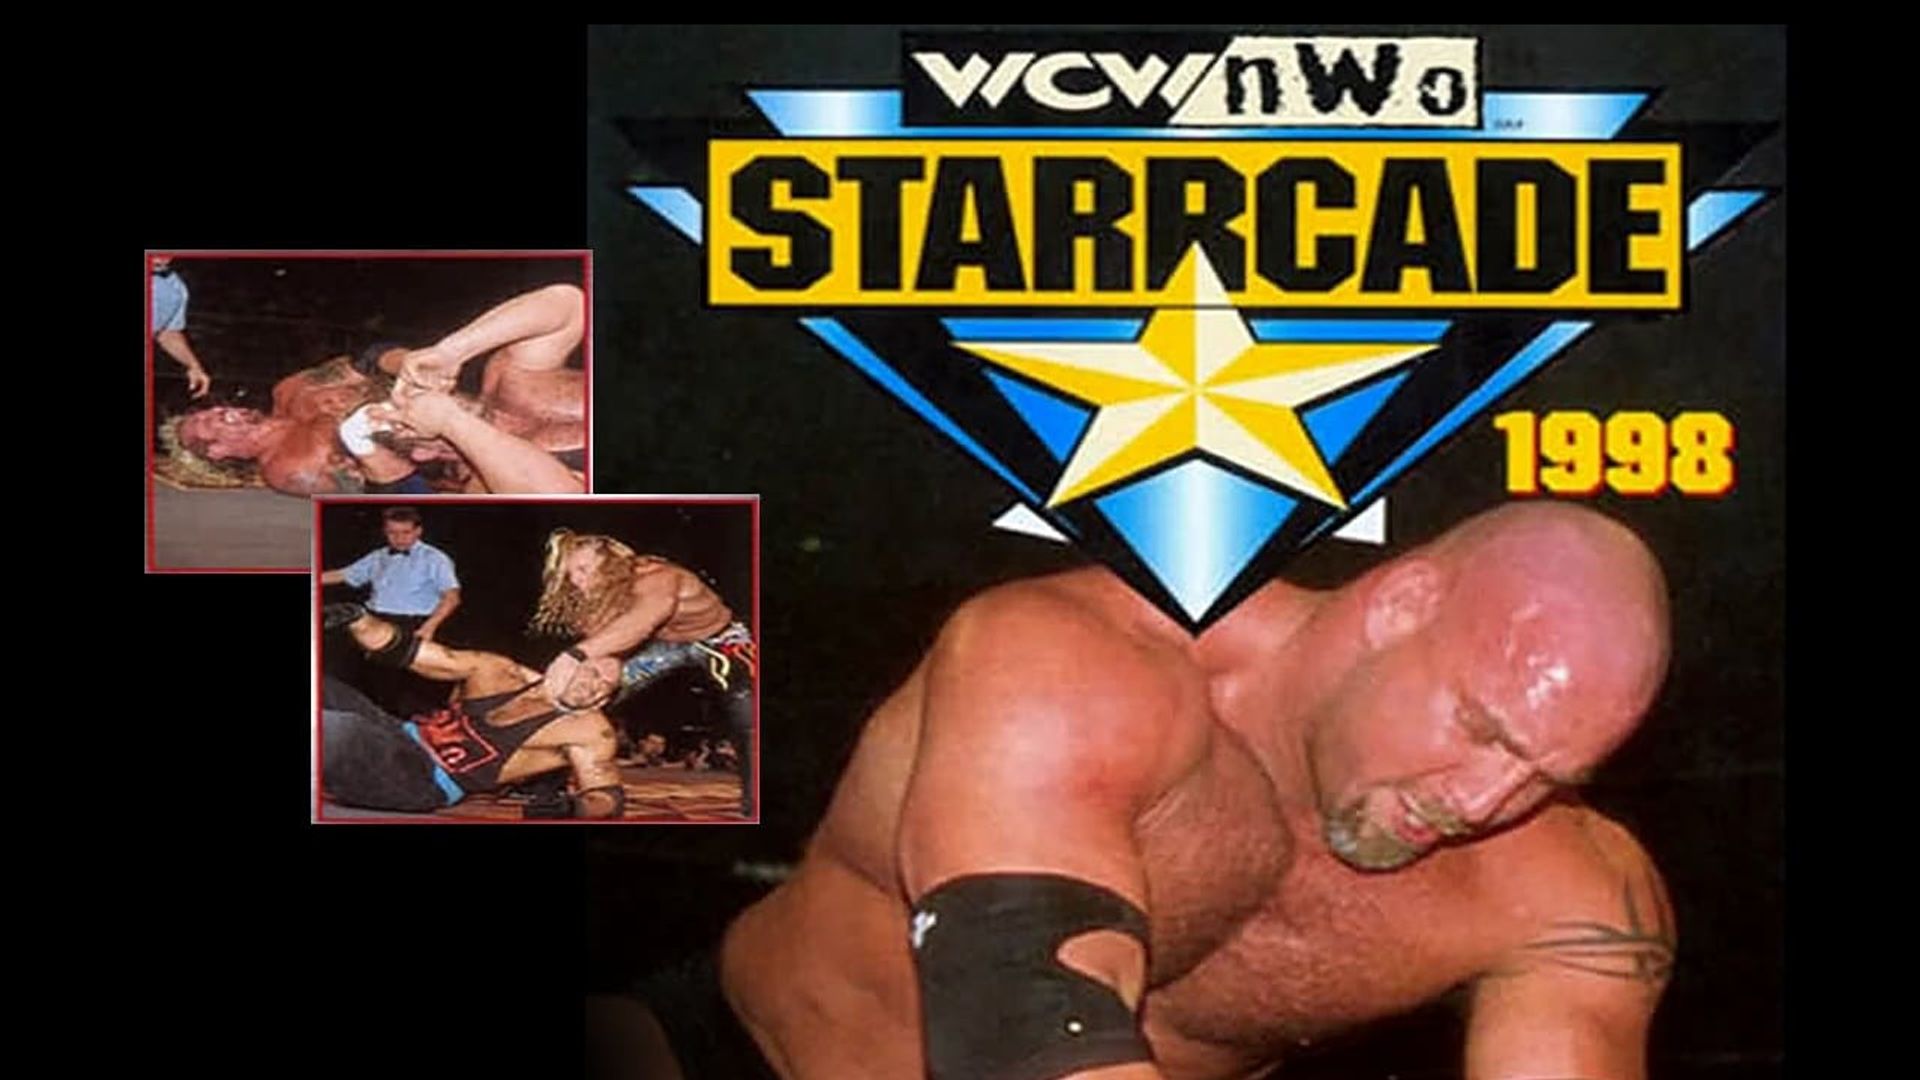 WCW/NWO Starrcade background